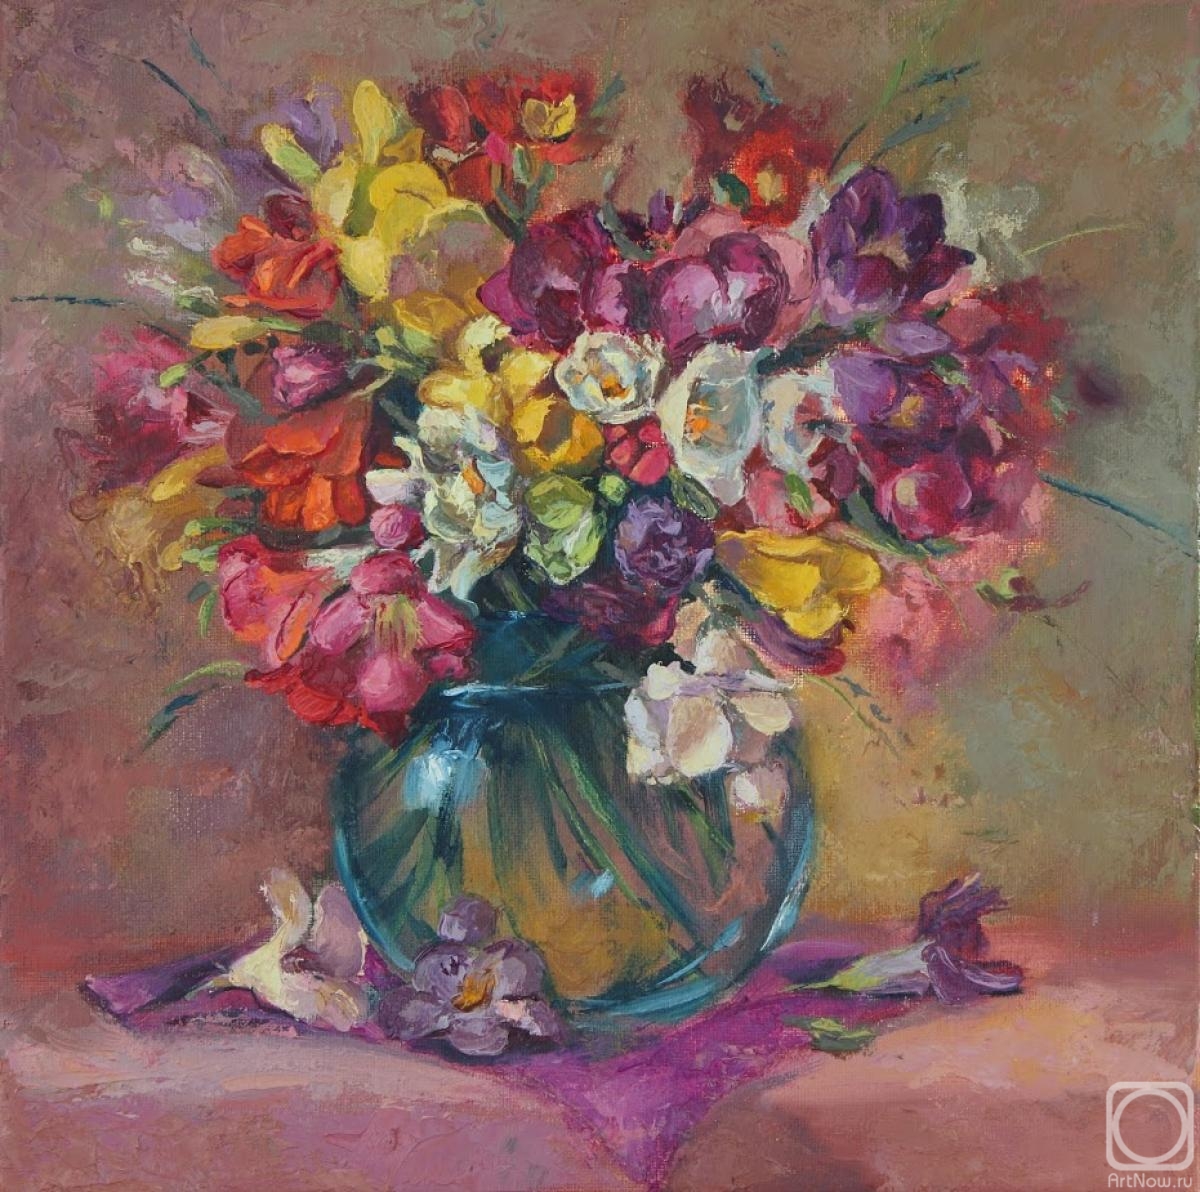 Vaitsekhovich Aksana. Bright bouquet